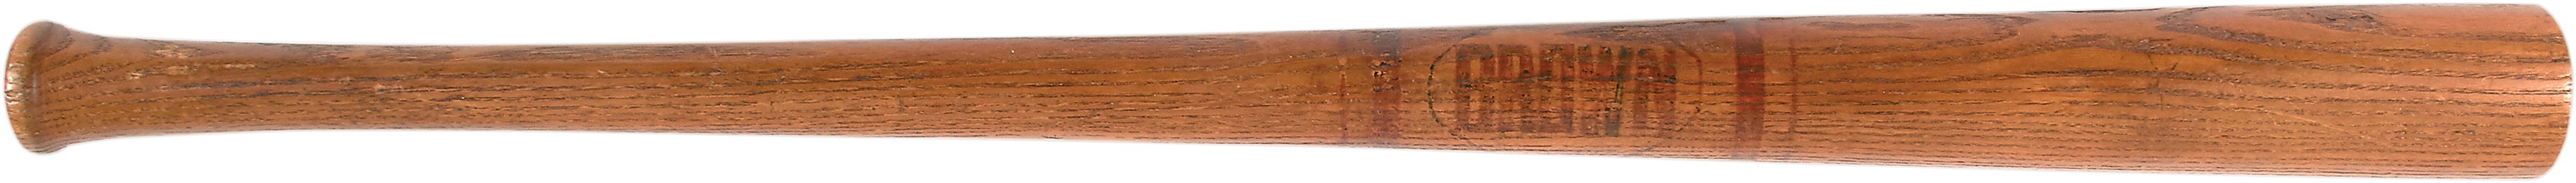 - 1890s Stenciled Baseball Bat by "Brown"